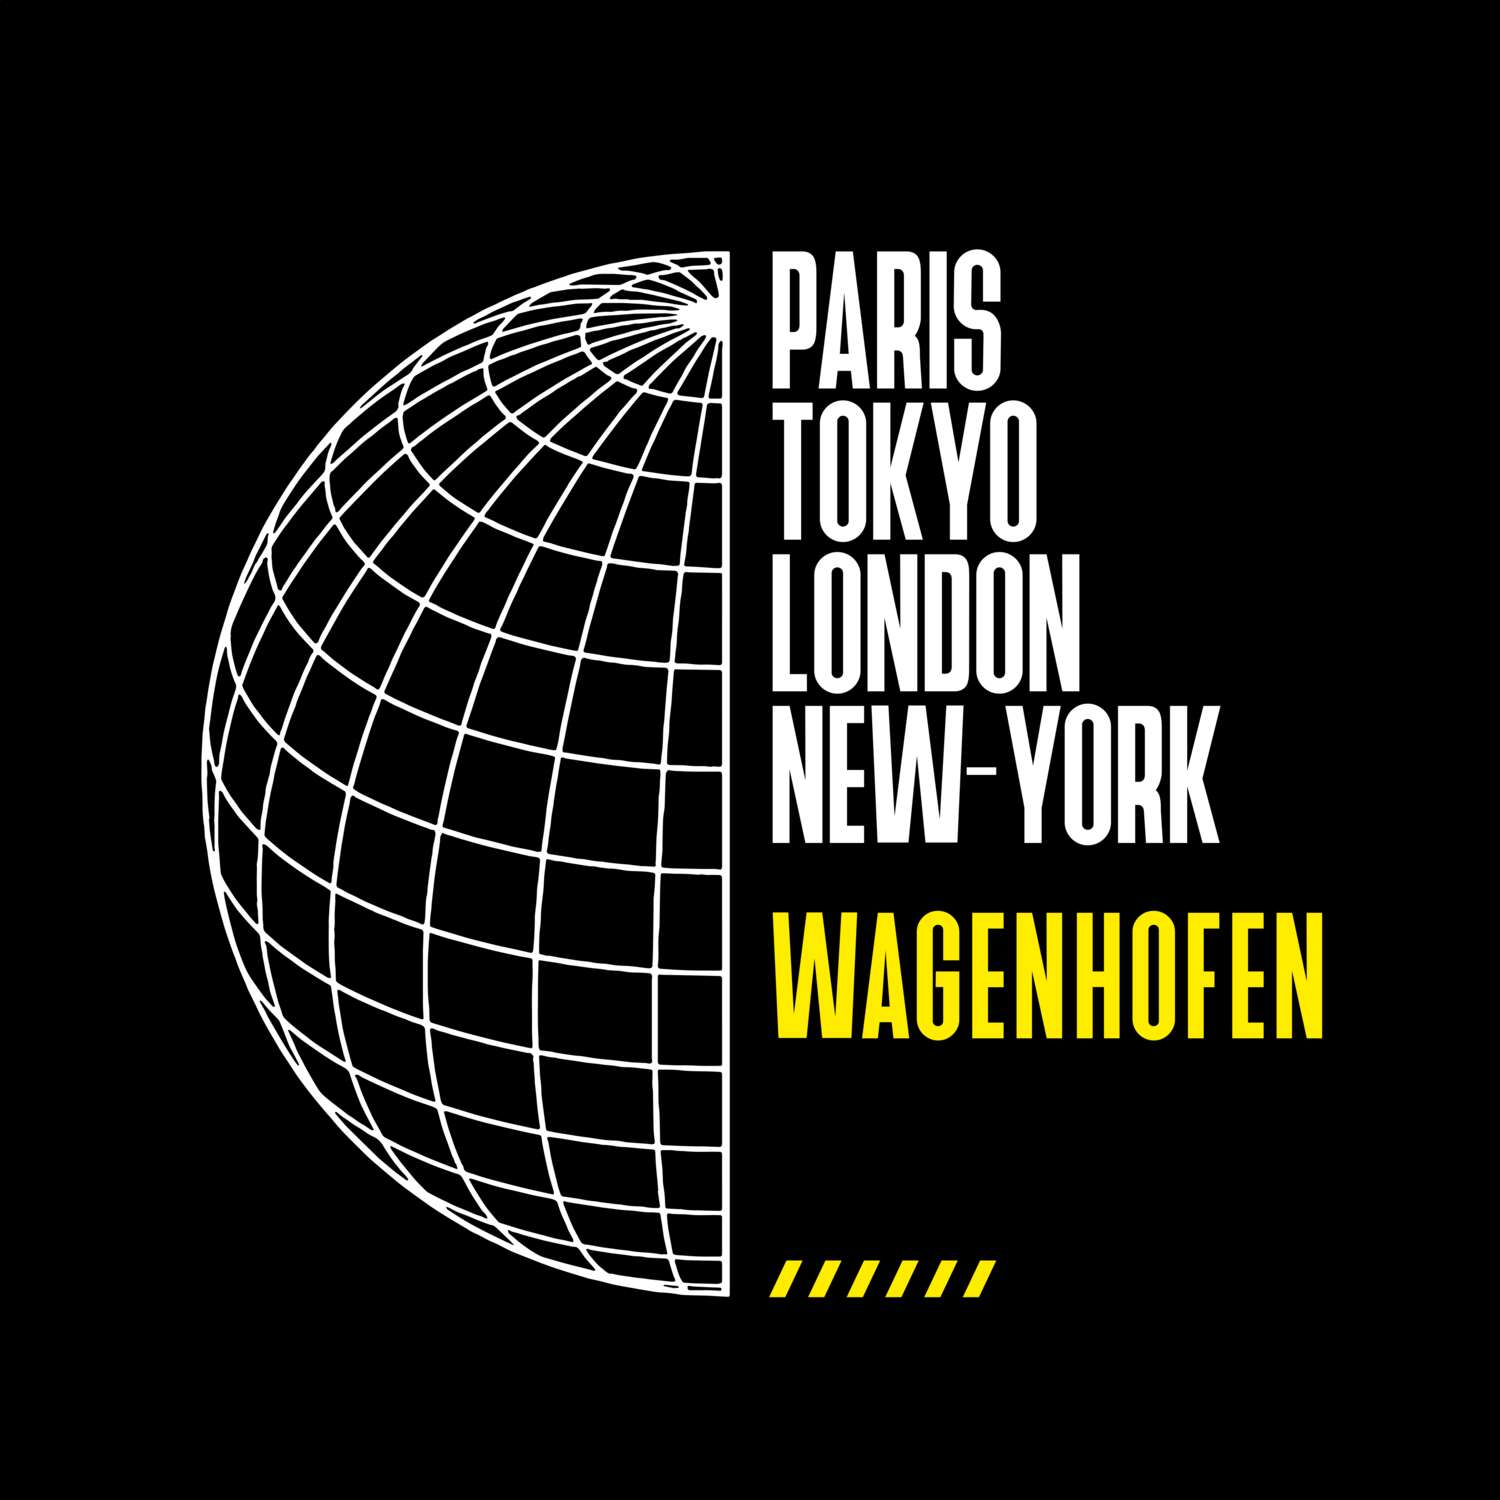 Wagenhofen T-Shirt »Paris Tokyo London«